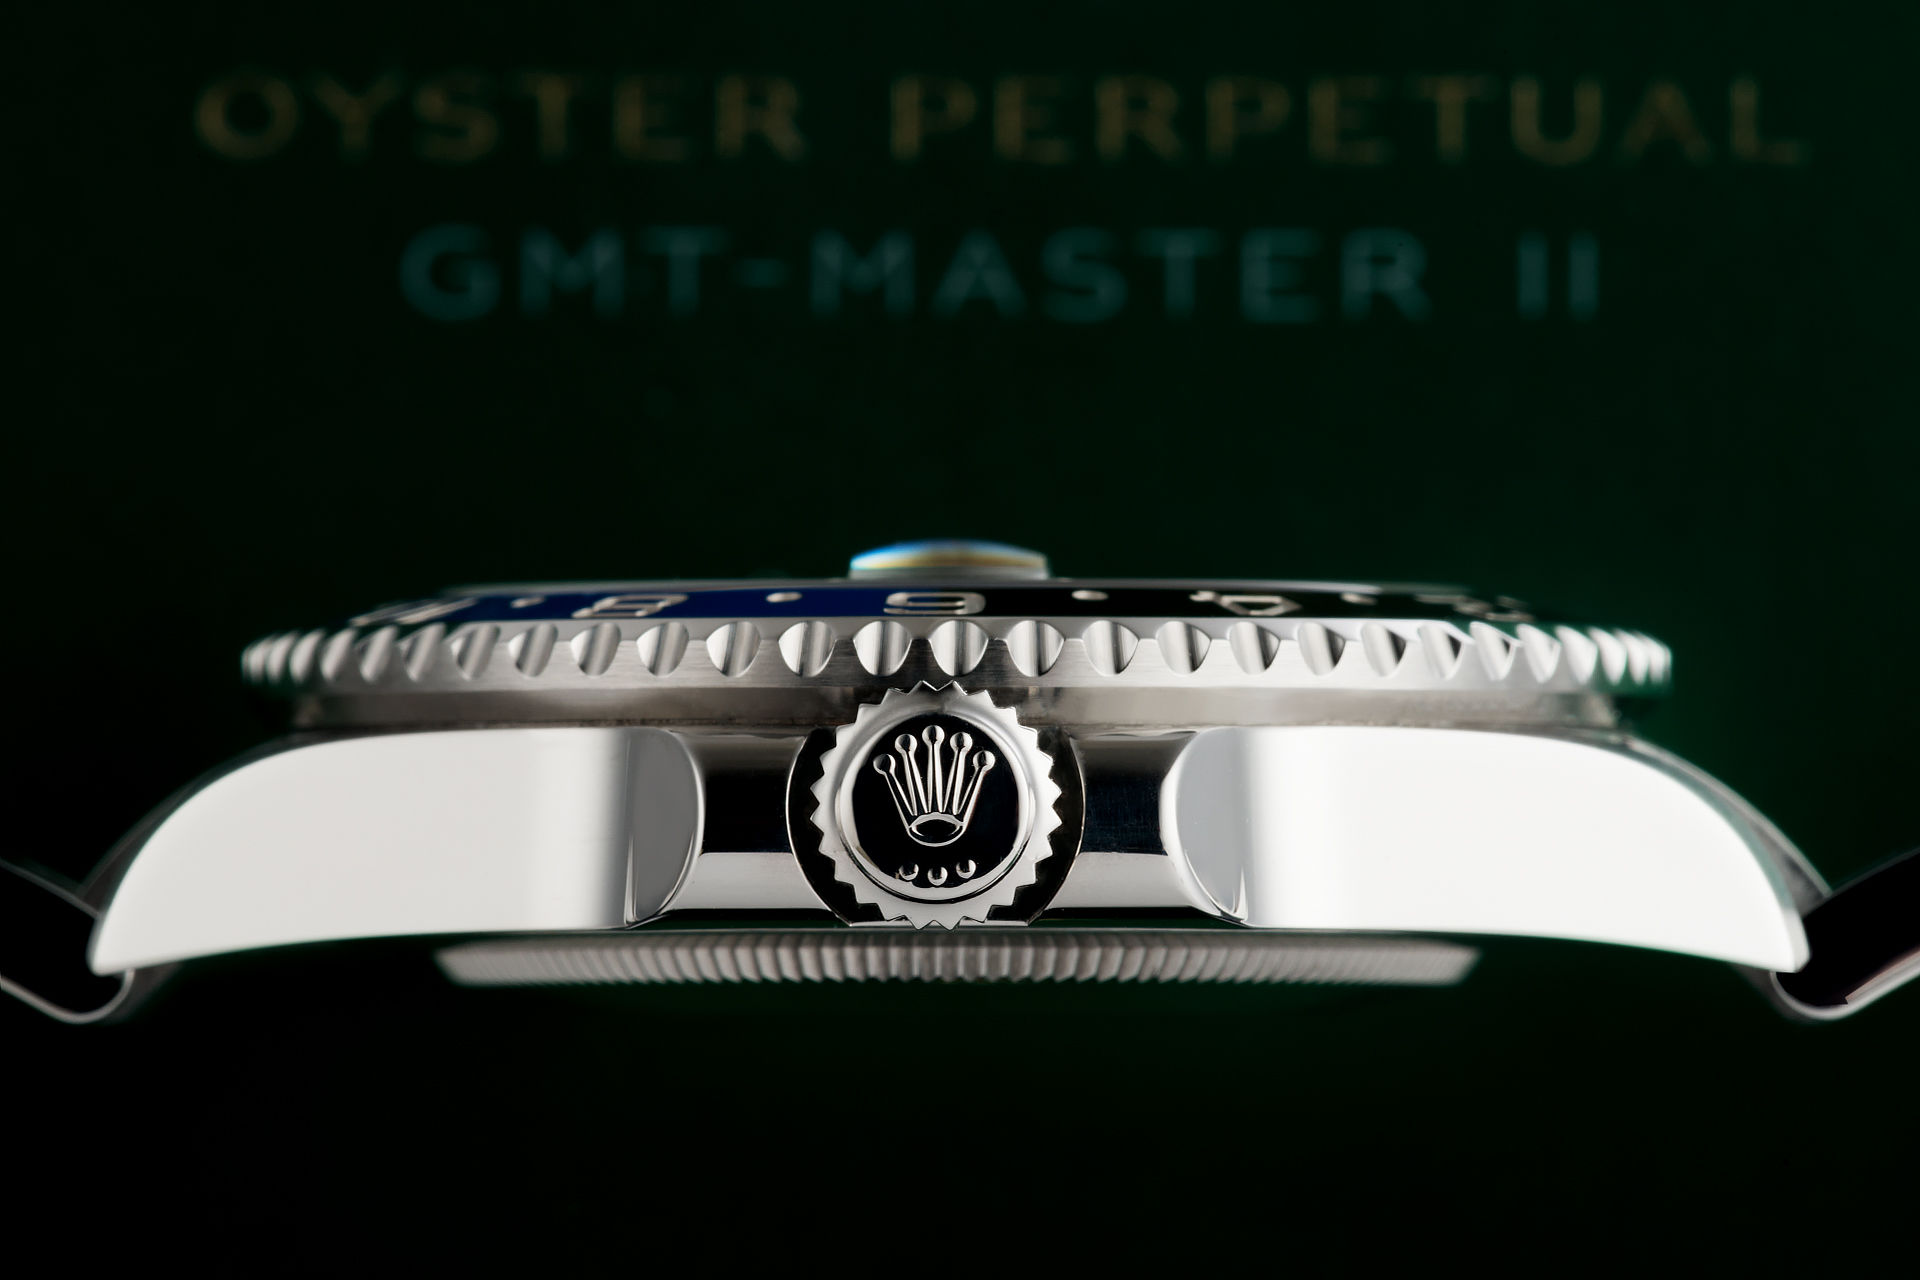 ref 116710BLNR | 5 Year Rolex Warranty | Rolex GMT-Master II